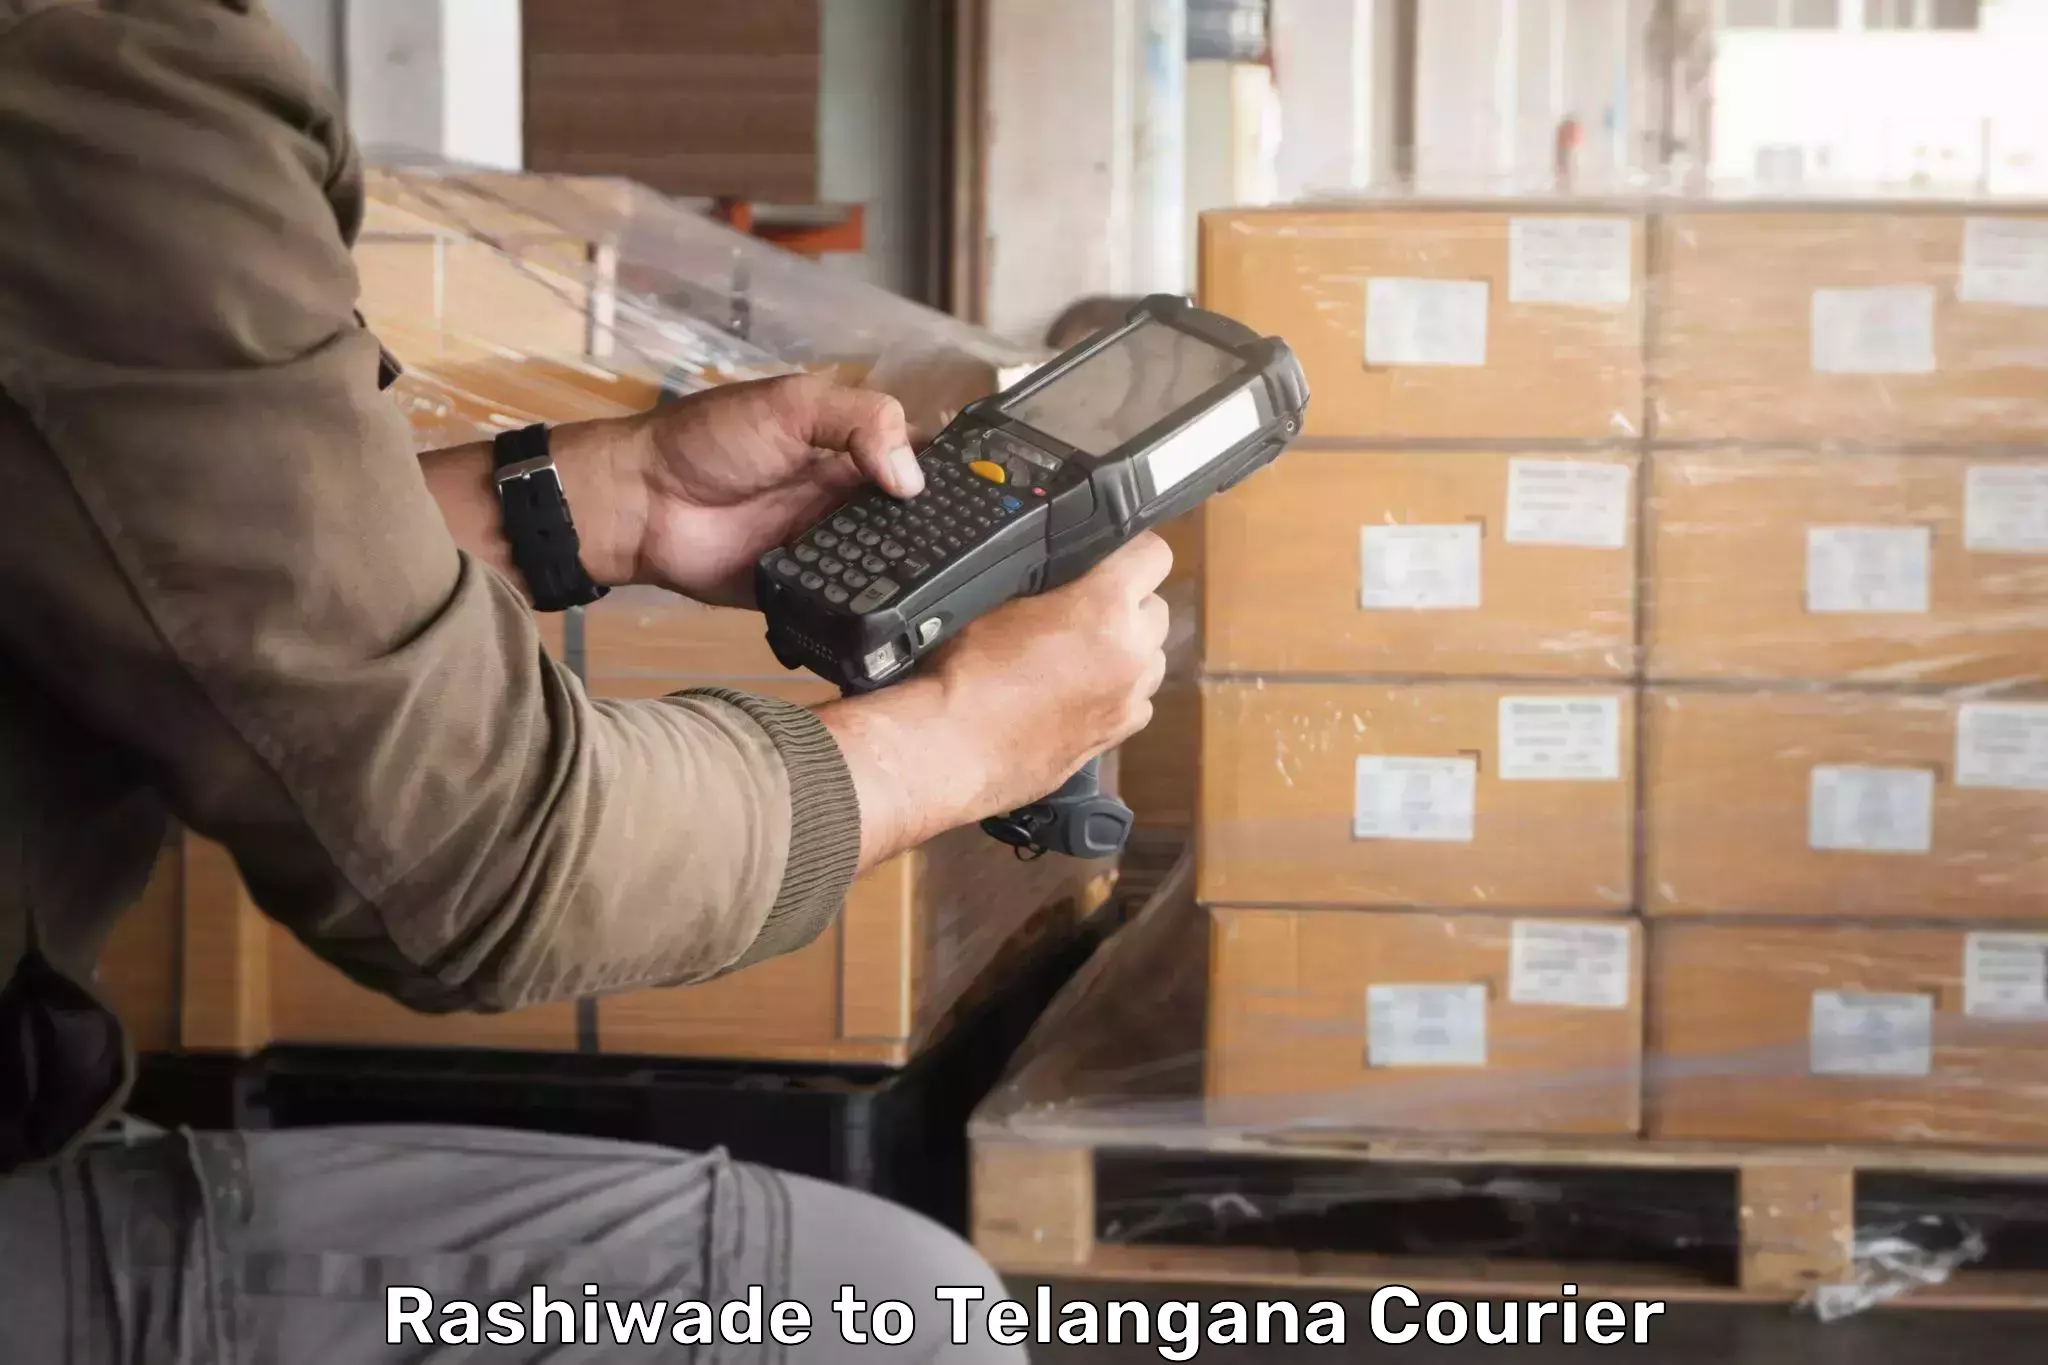 Professional courier handling Rashiwade to Khairatabad